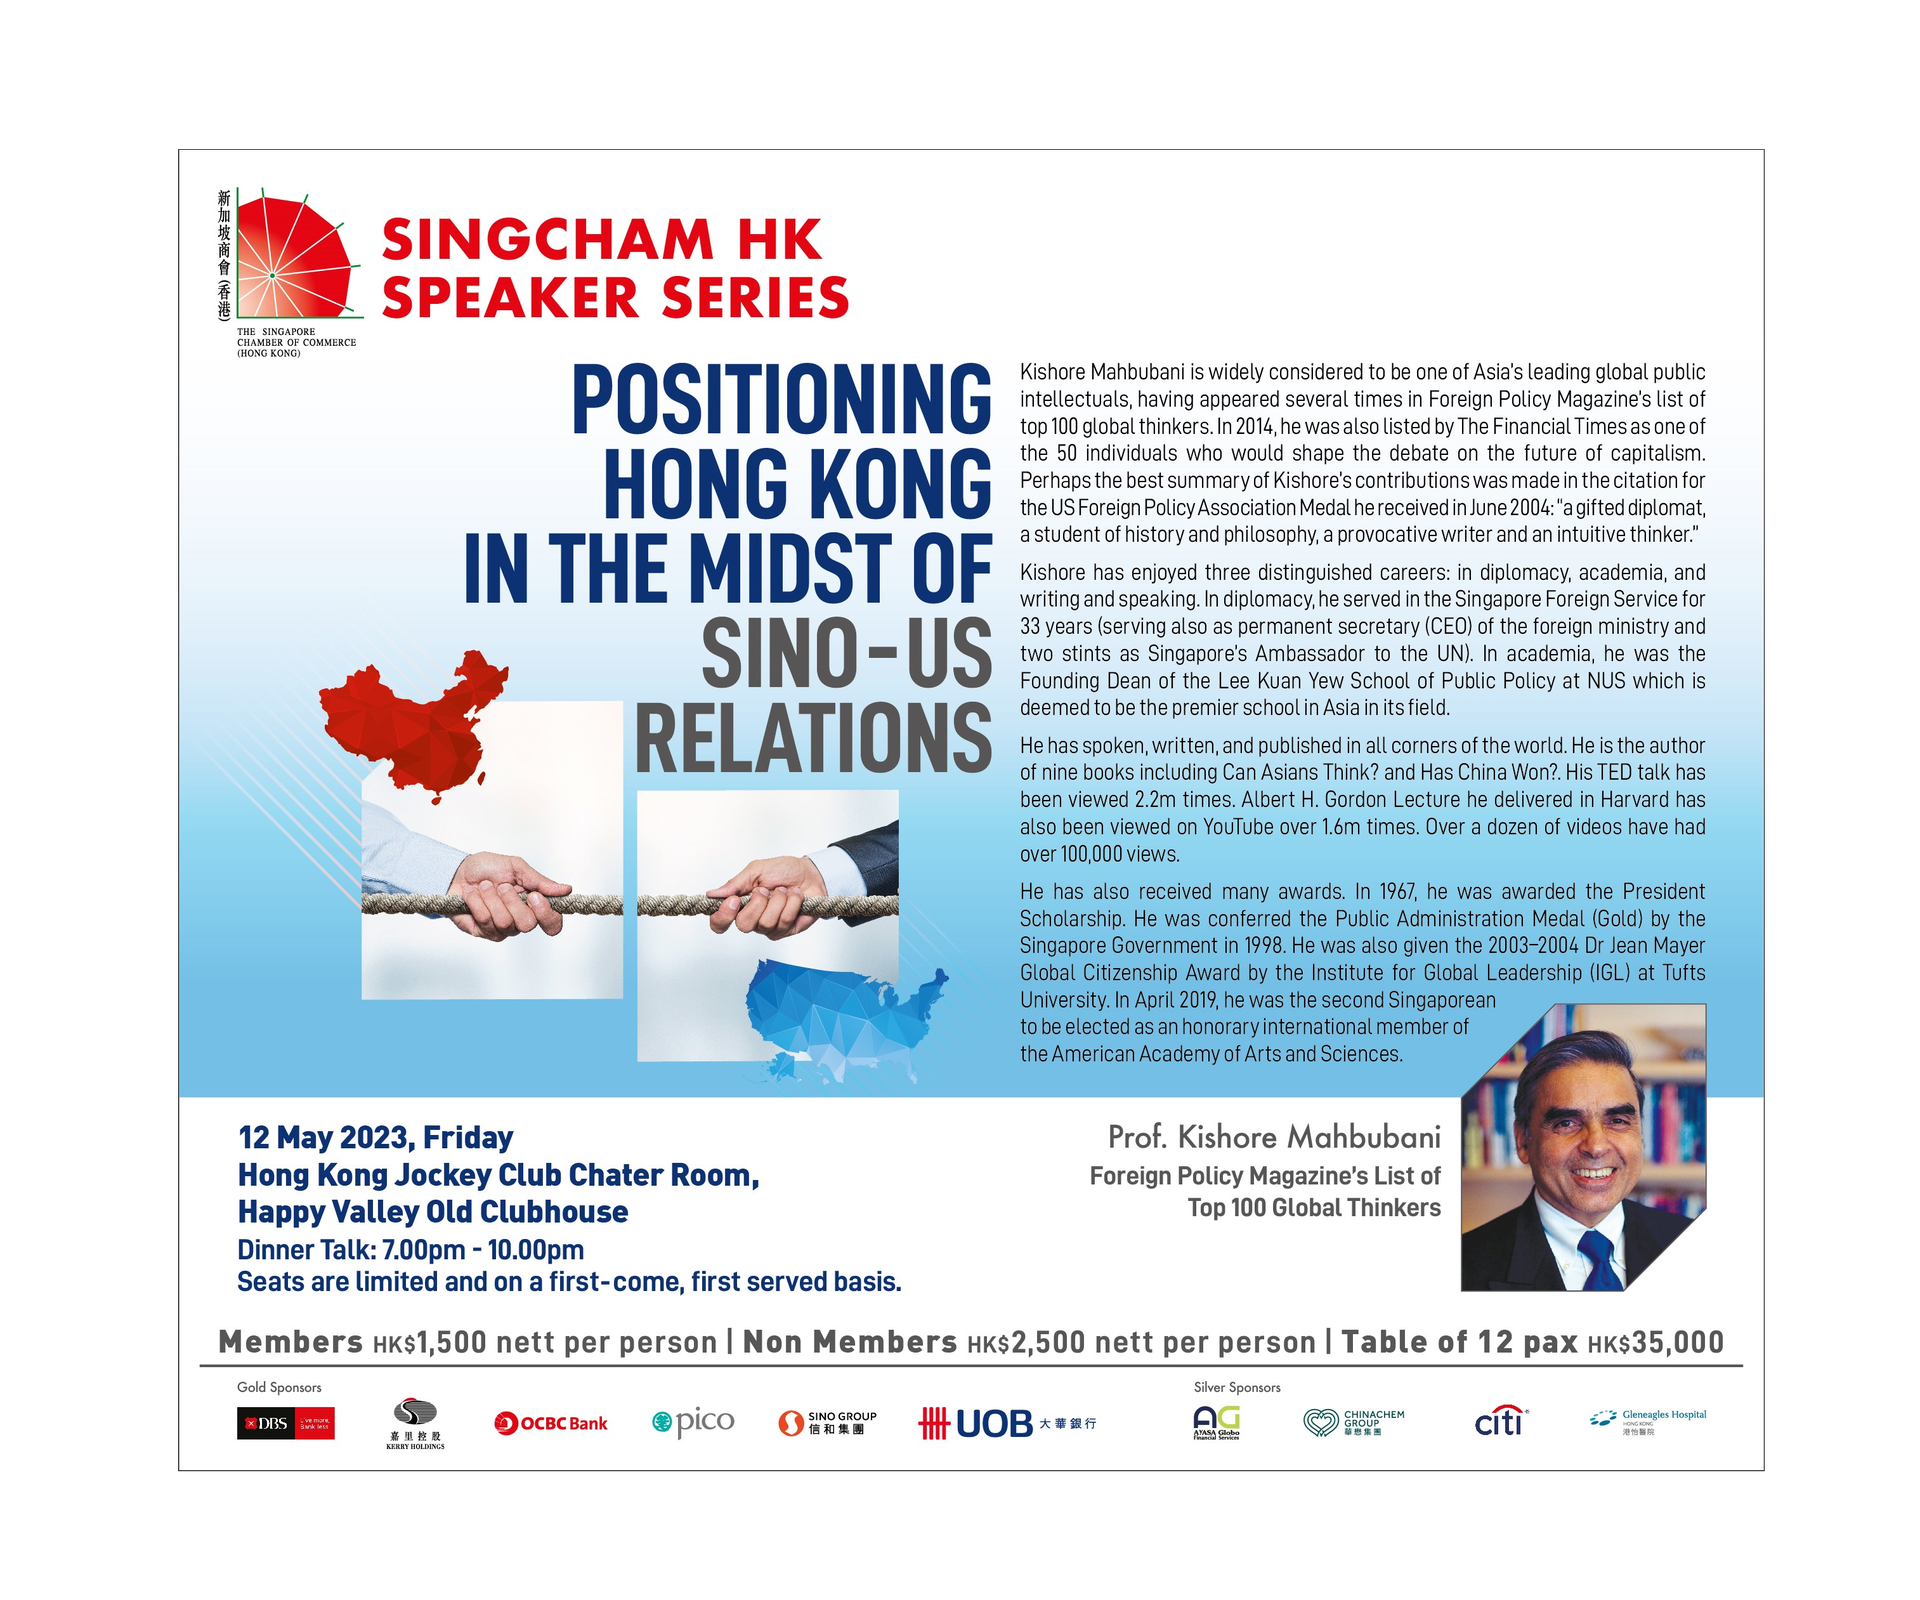 thumbnails [SingCham HK Speaker Series] Dinner Talk by Prof. Kishore Mahbubani on "Positioning Hong Kong in the Midst of SINO-US Relations".